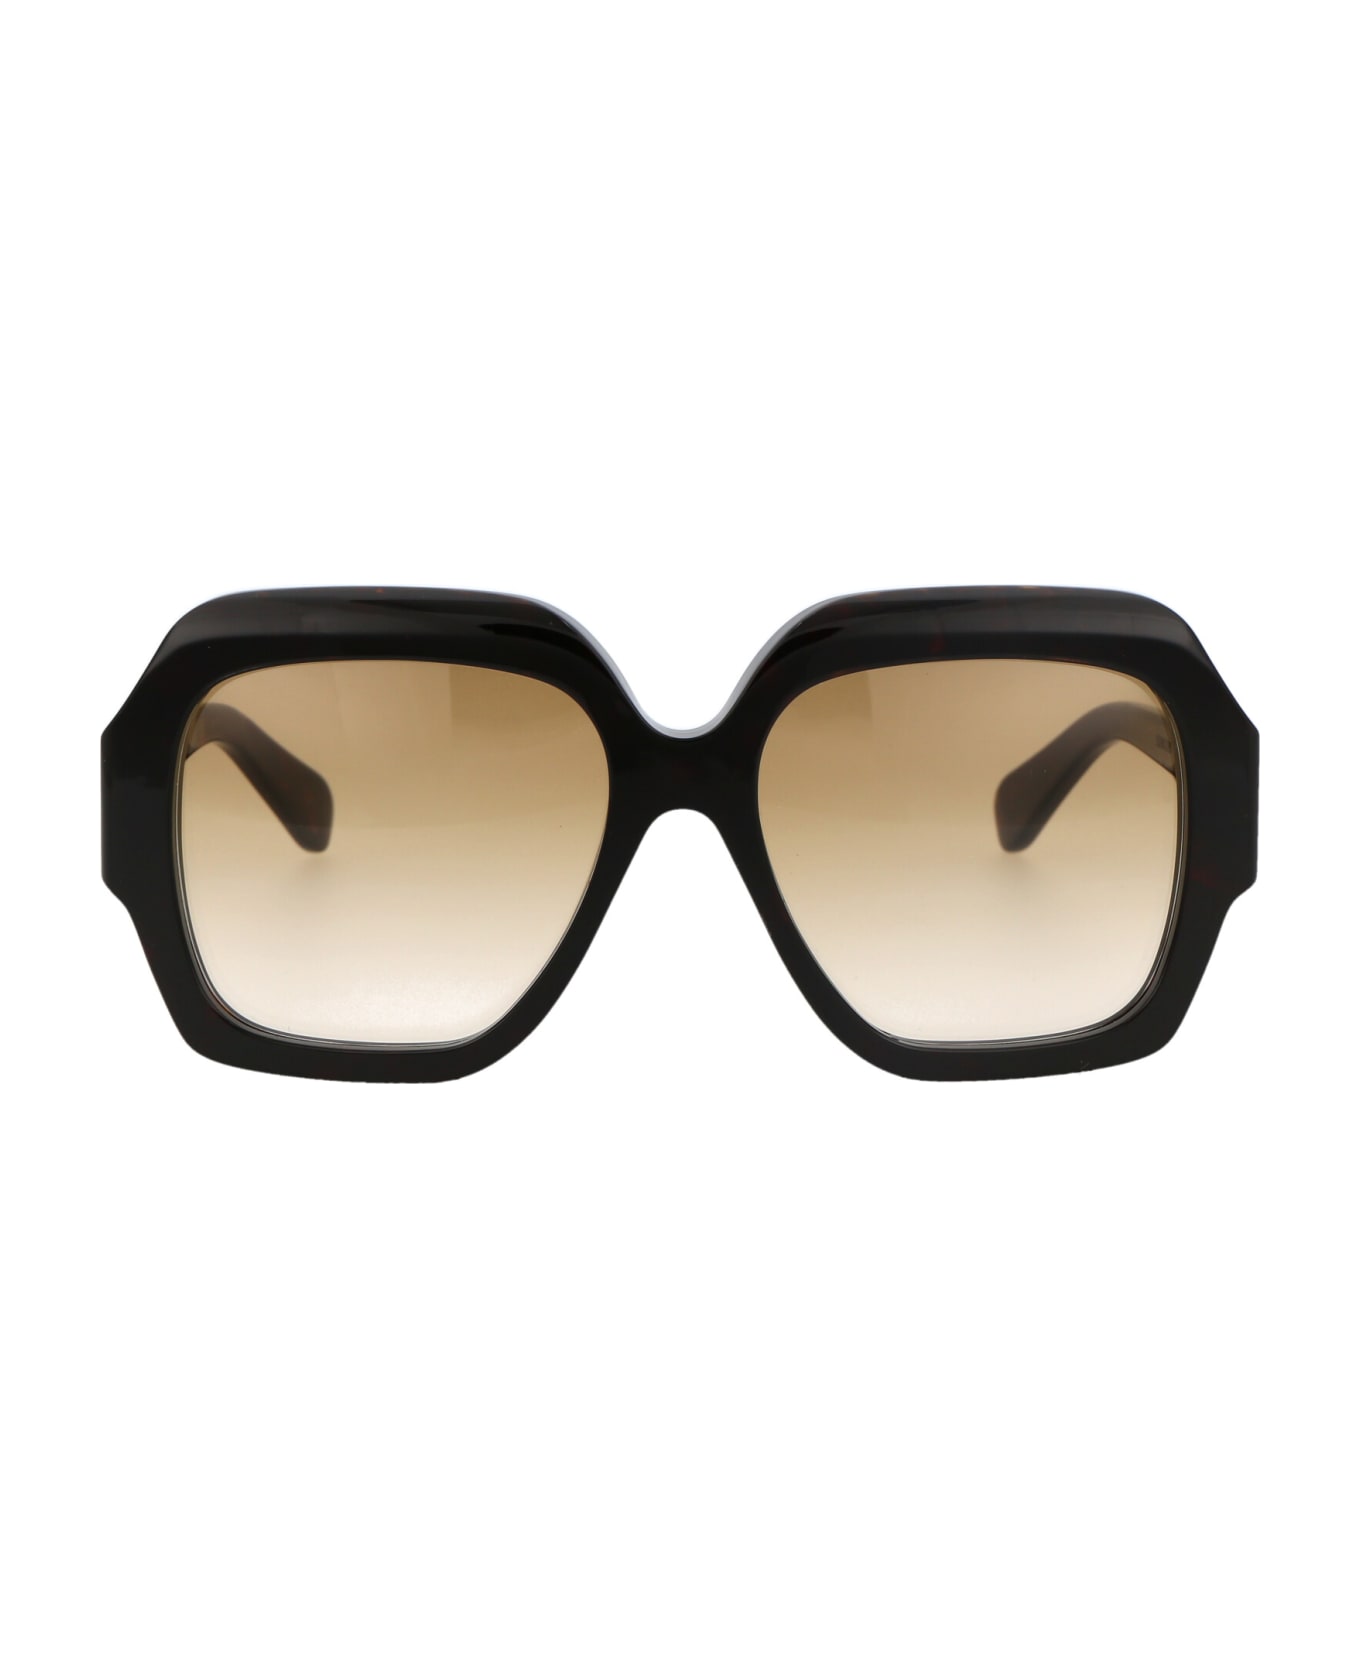 Chloé Eyewear Ch0154s Sunglasses - 002 HAVANA HAVANA BROWN サングラス